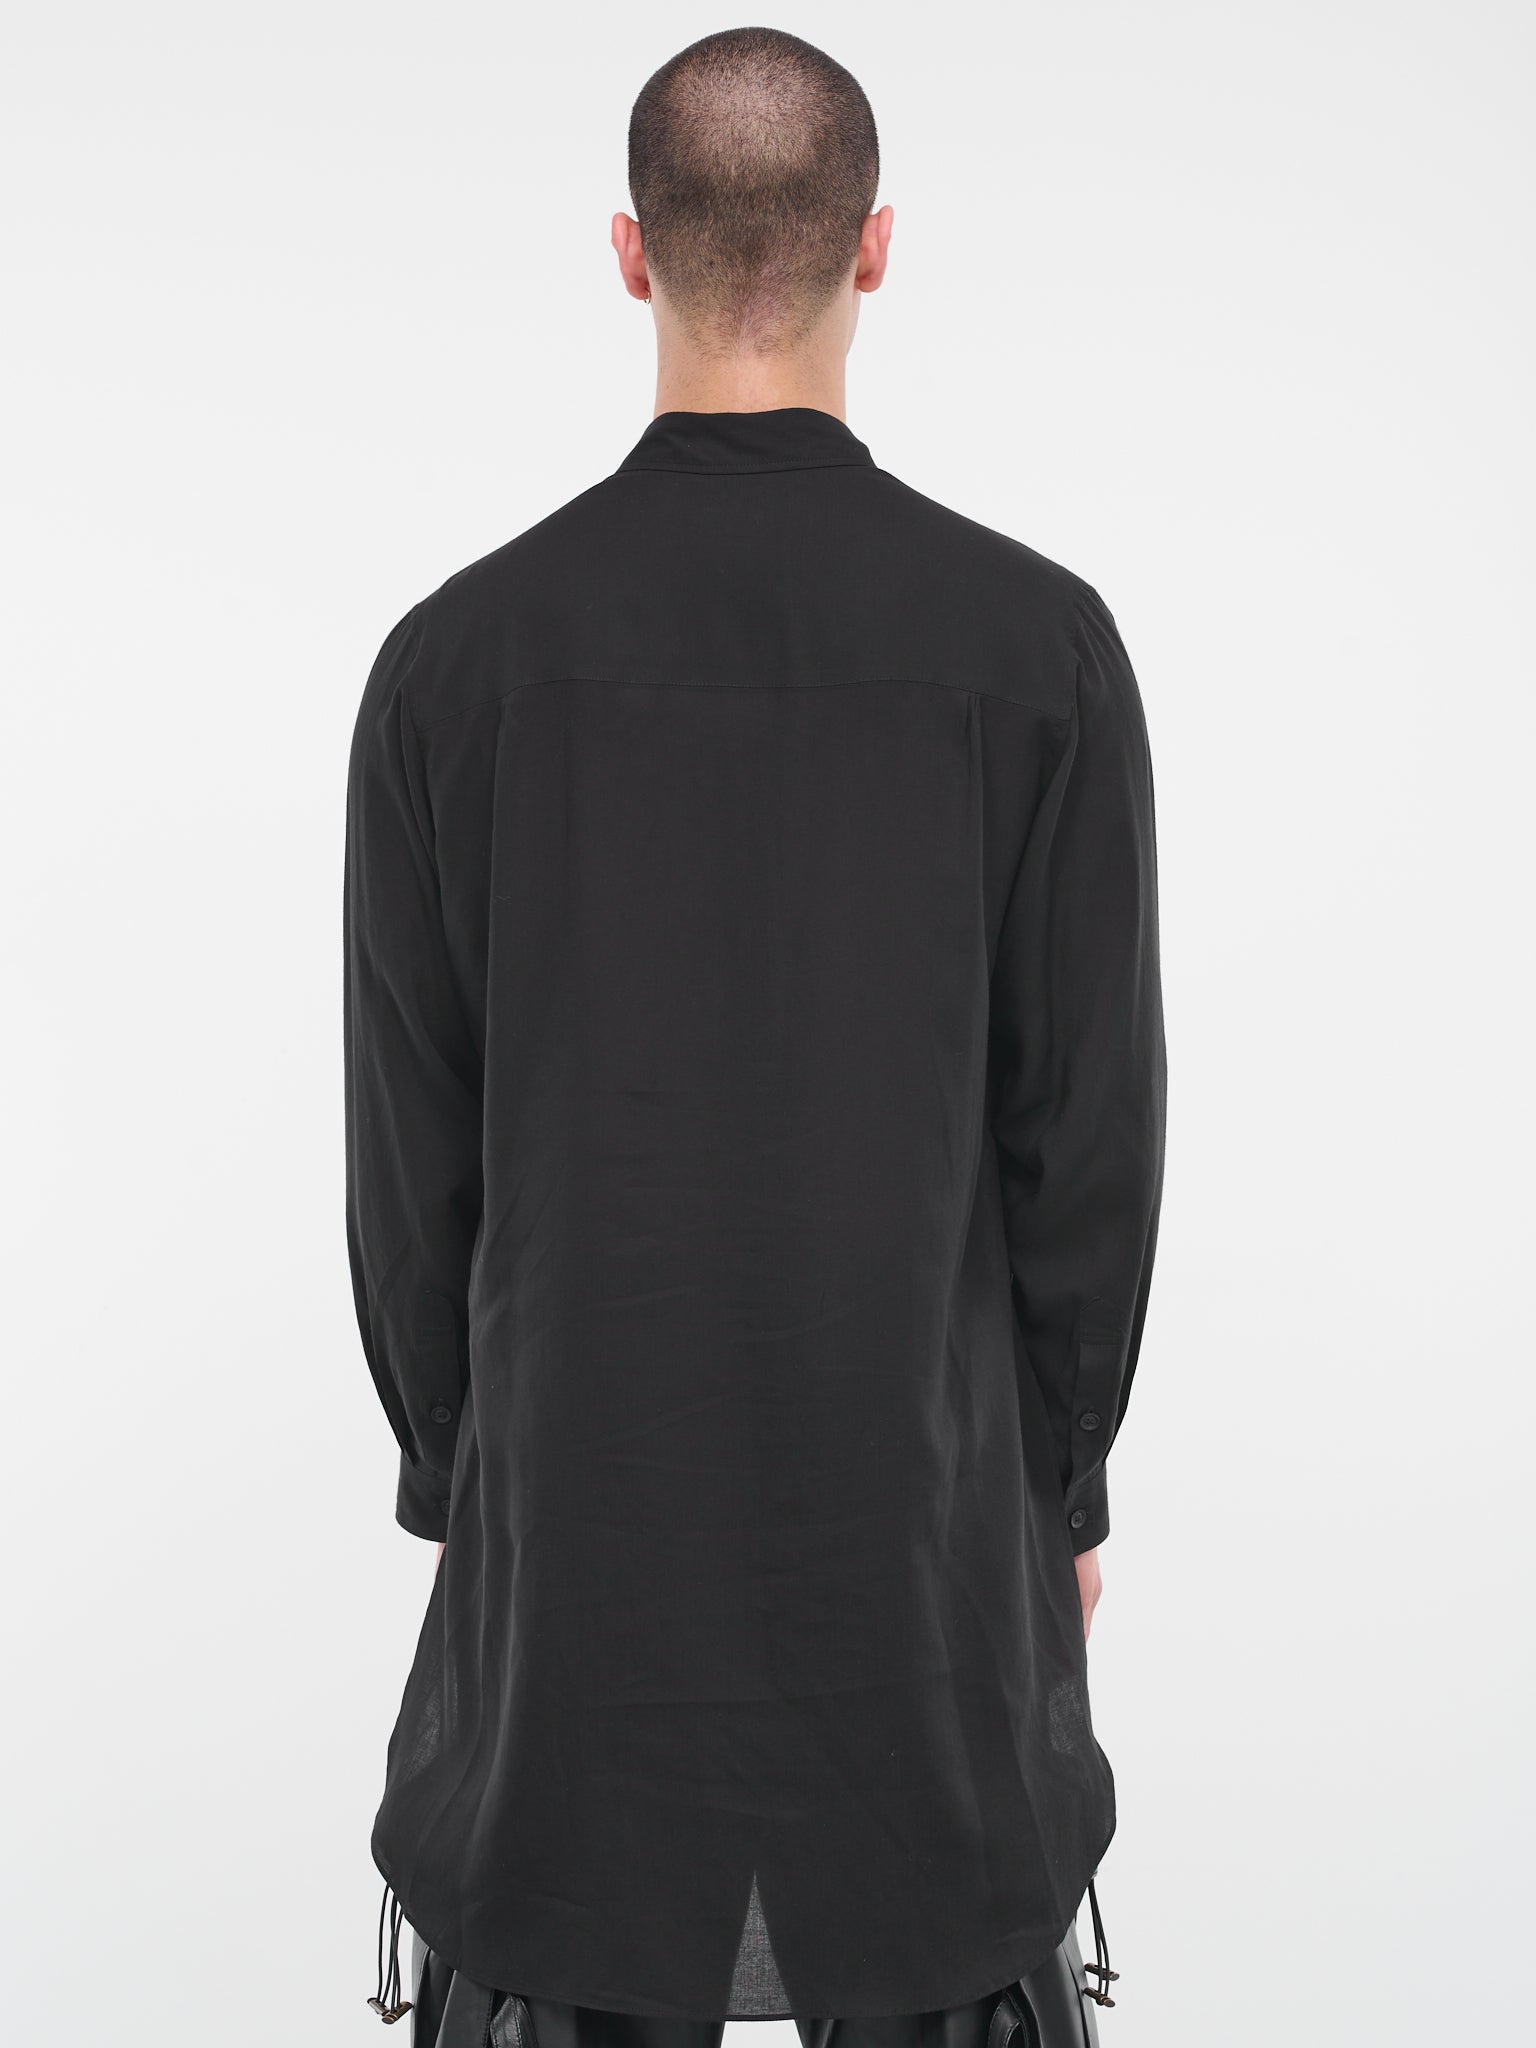 Rounded Shirt (HJ-B23-201-1-BLACK)